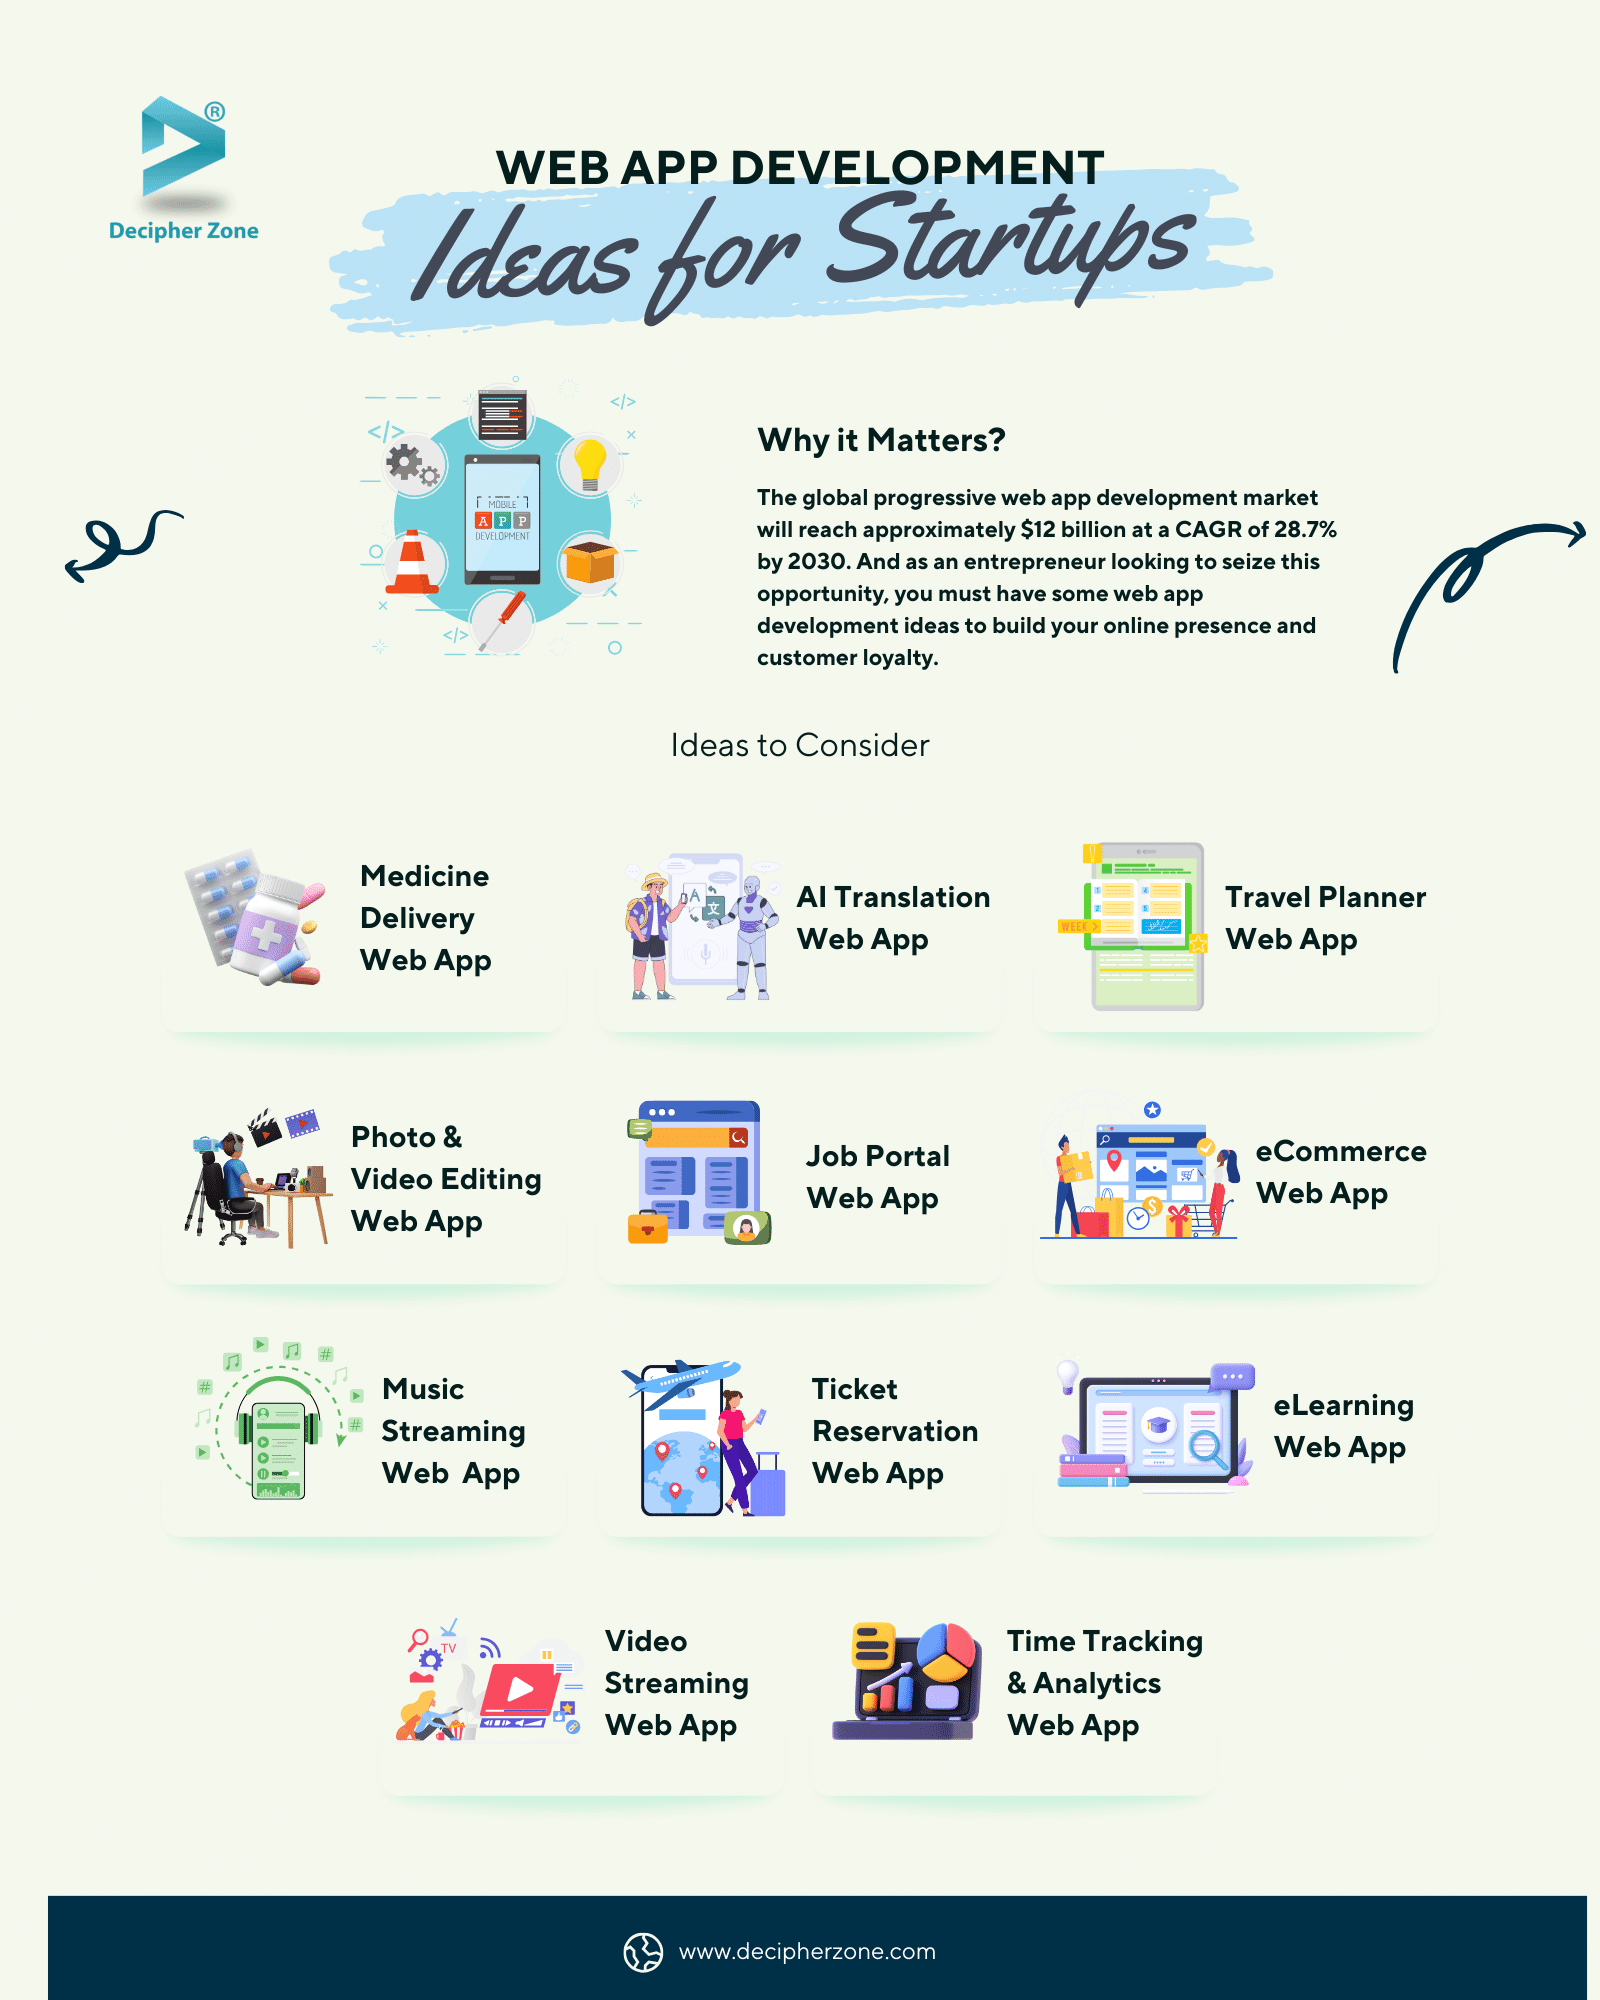 Web App Development Ideas for StartUps